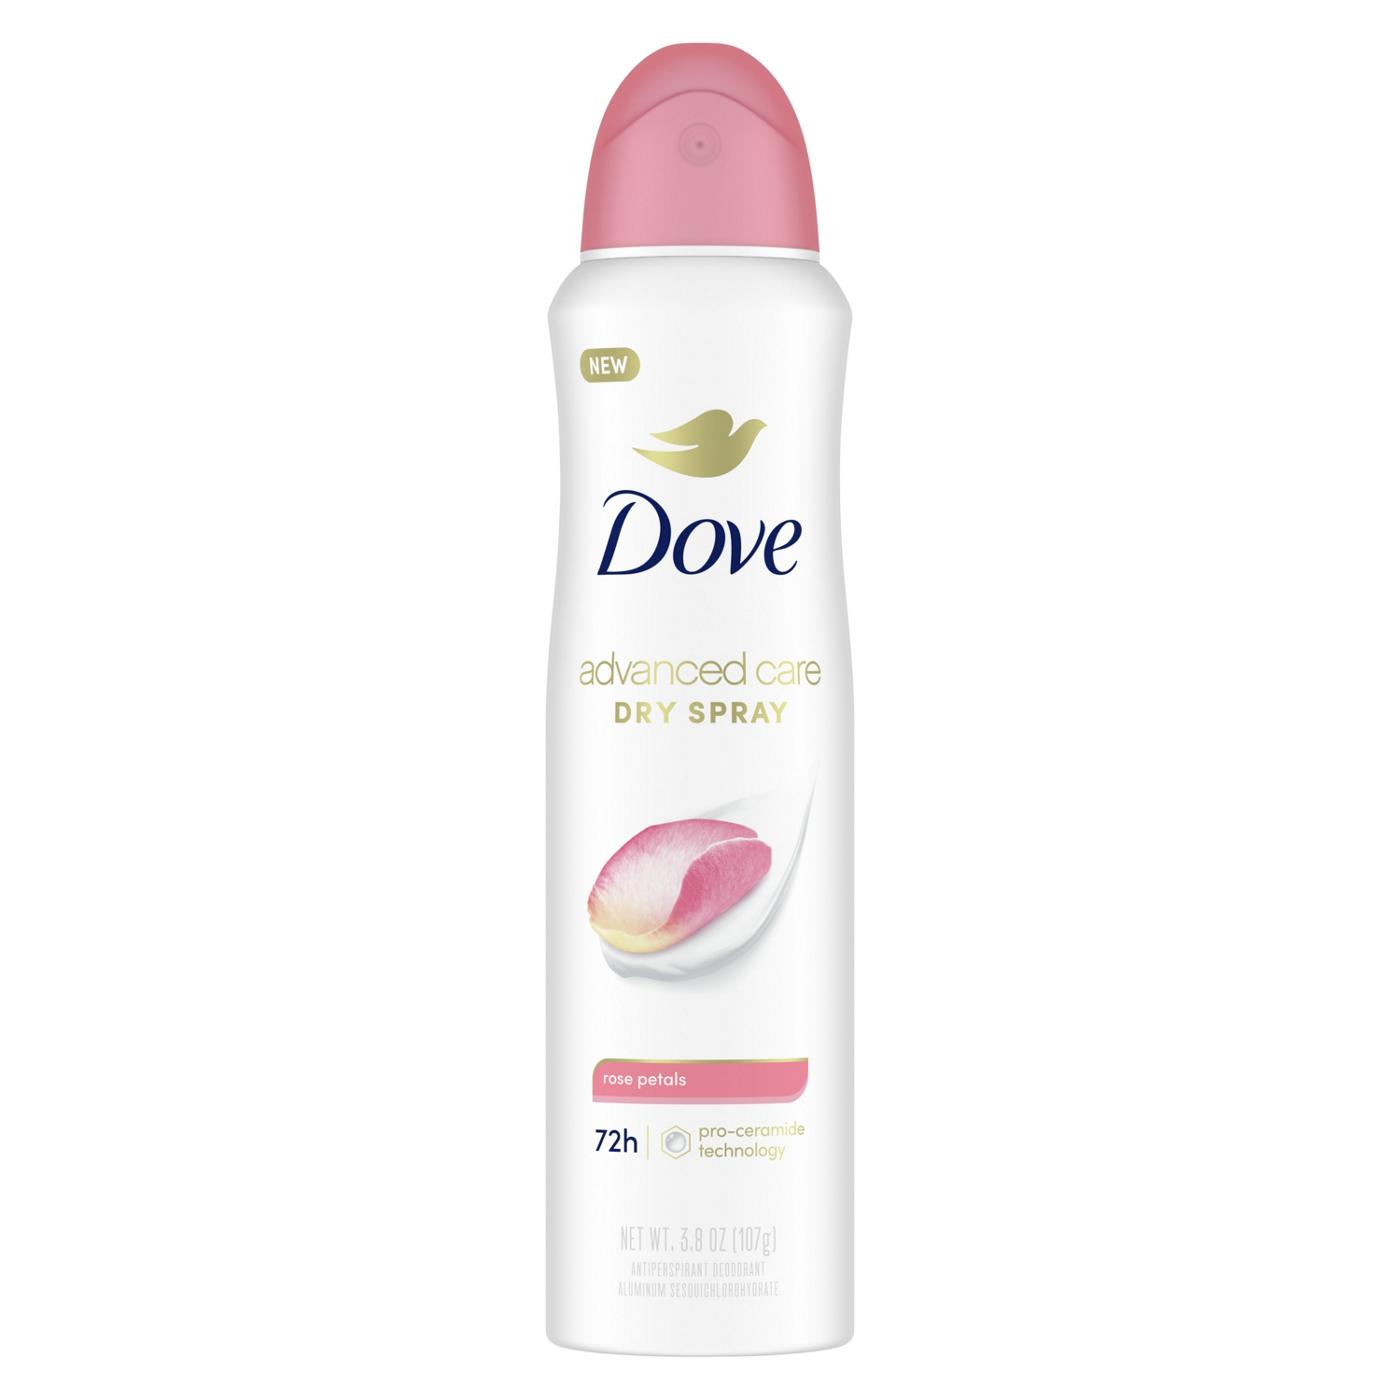 Dove Advanced Care Dry Spray Antiperspirant Deodorant Rose Petals; image 1 of 9